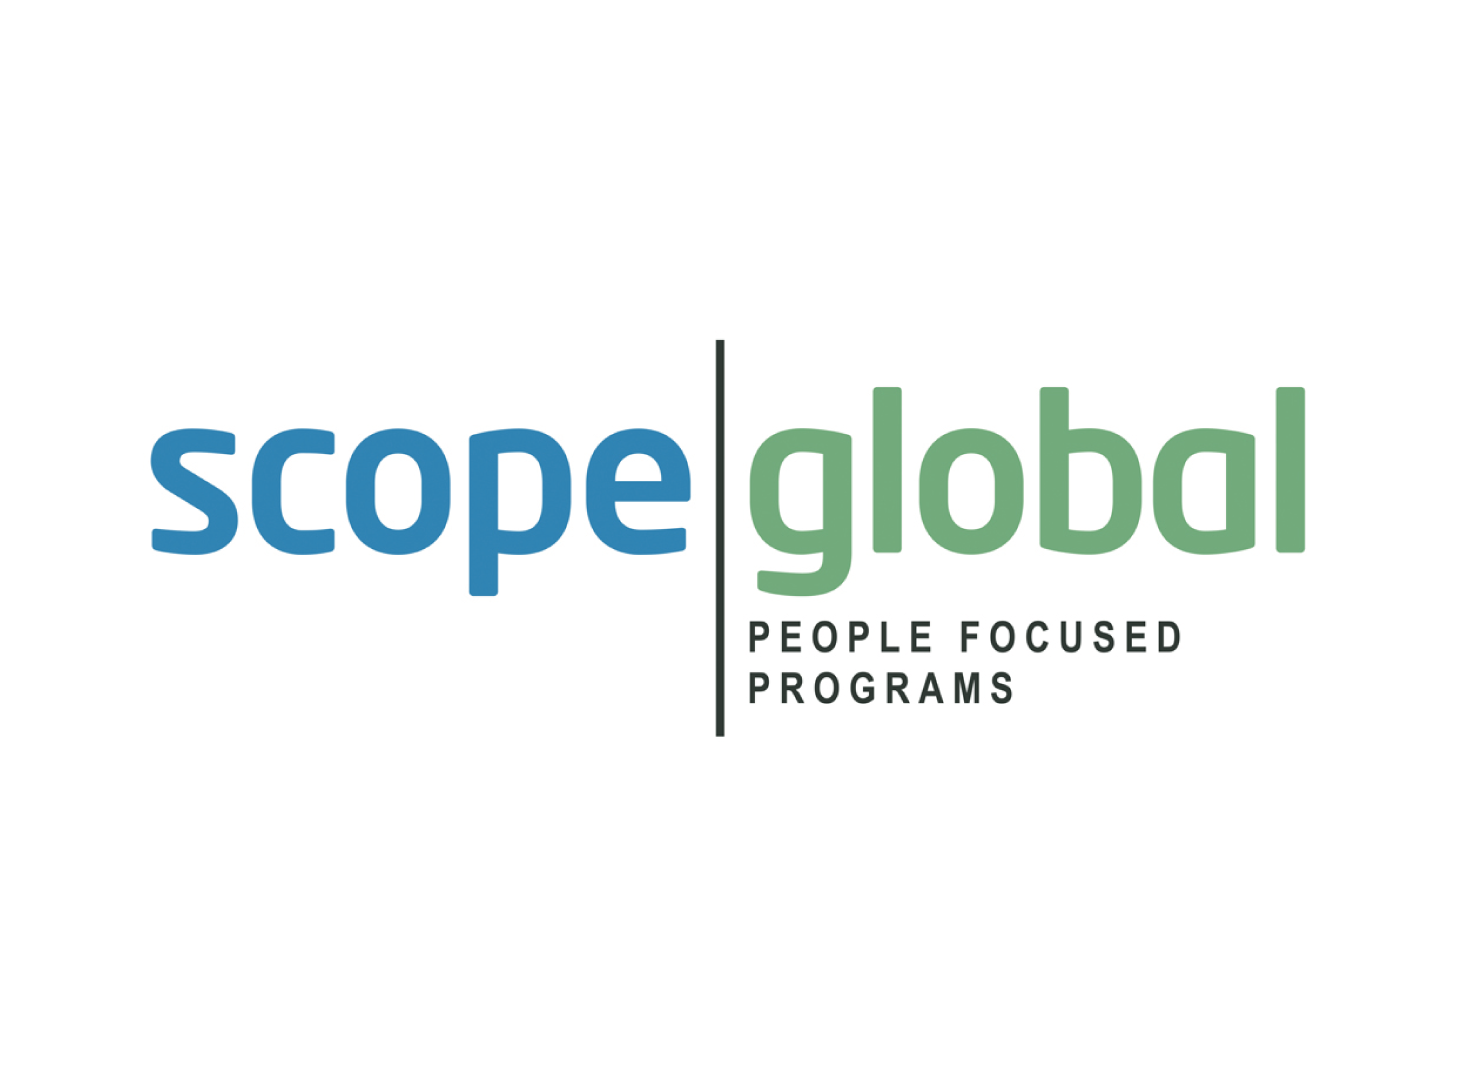 Глобального СКОУП. Global scope. Global scope logo. Shared global